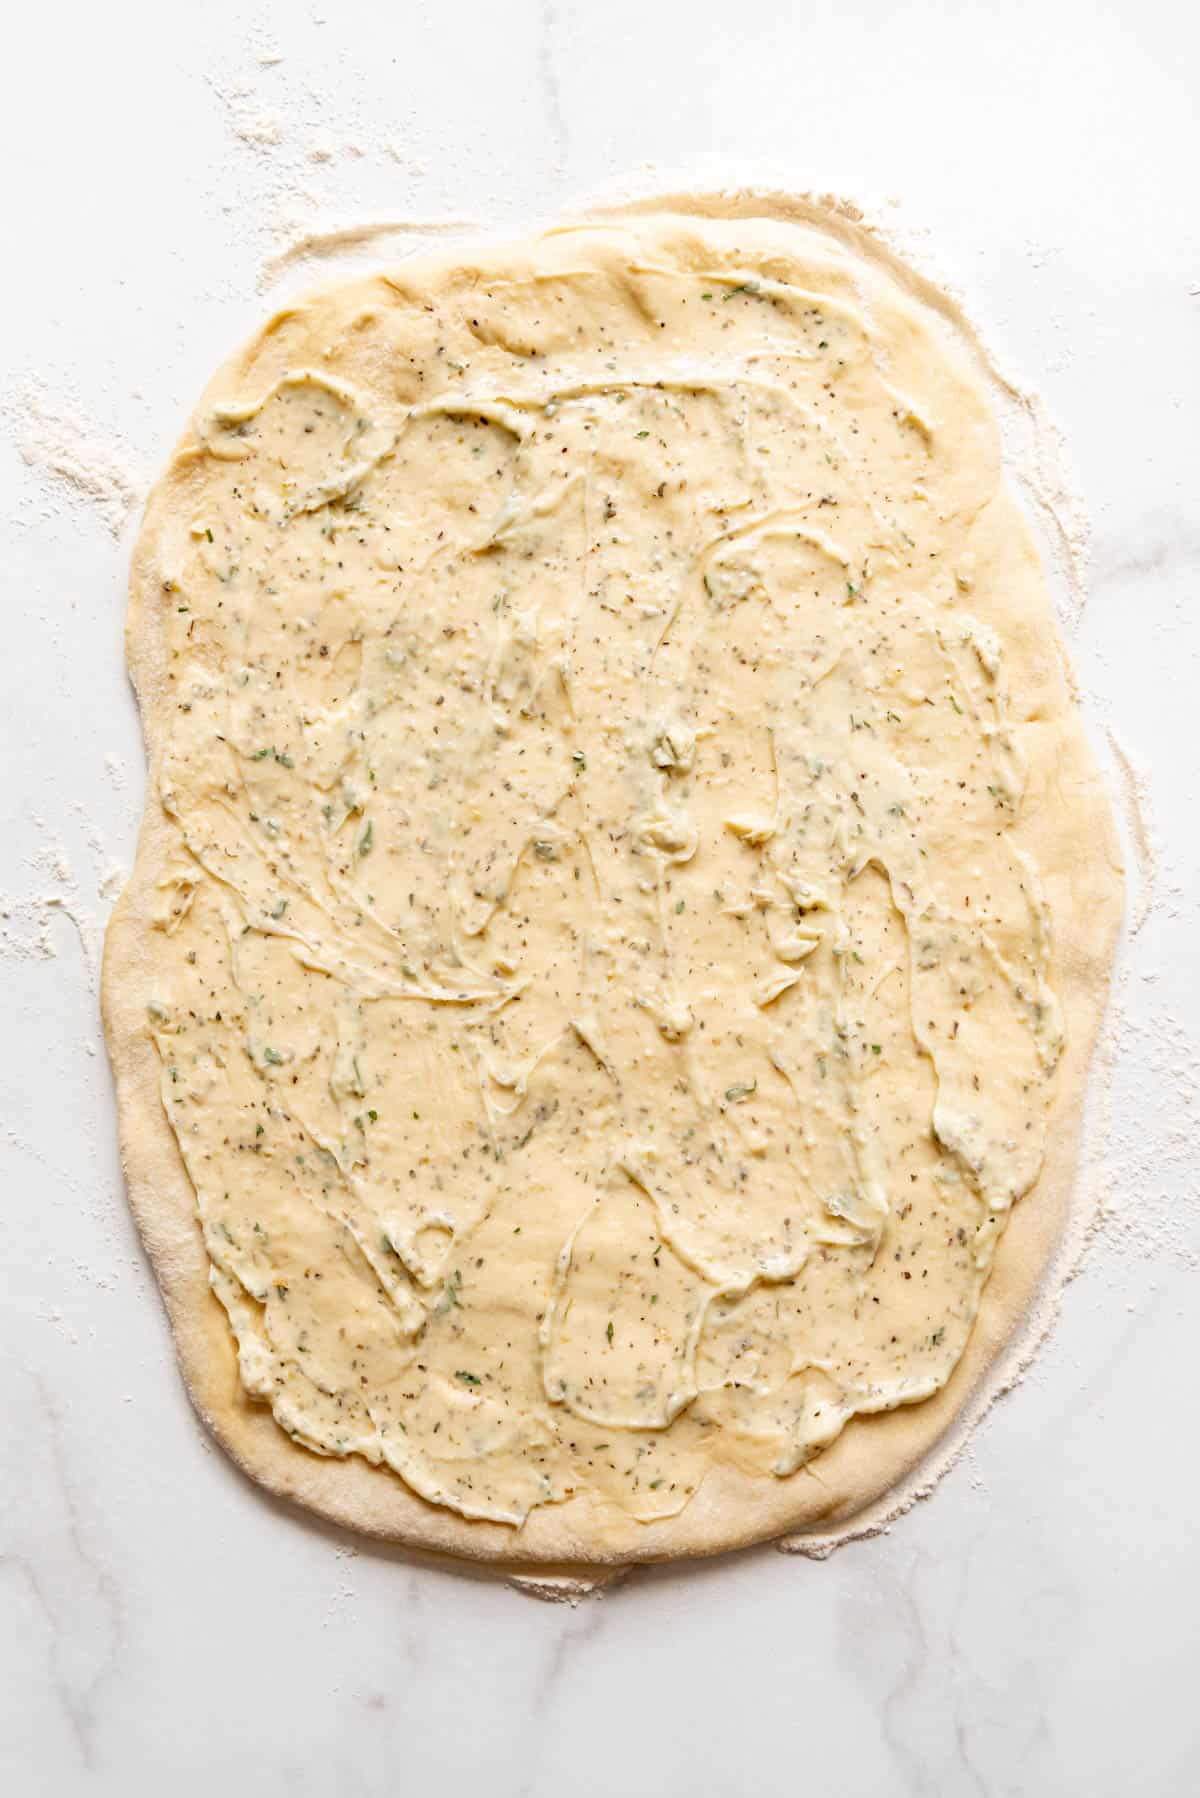 Softened garlic butter spread onto roll dough.